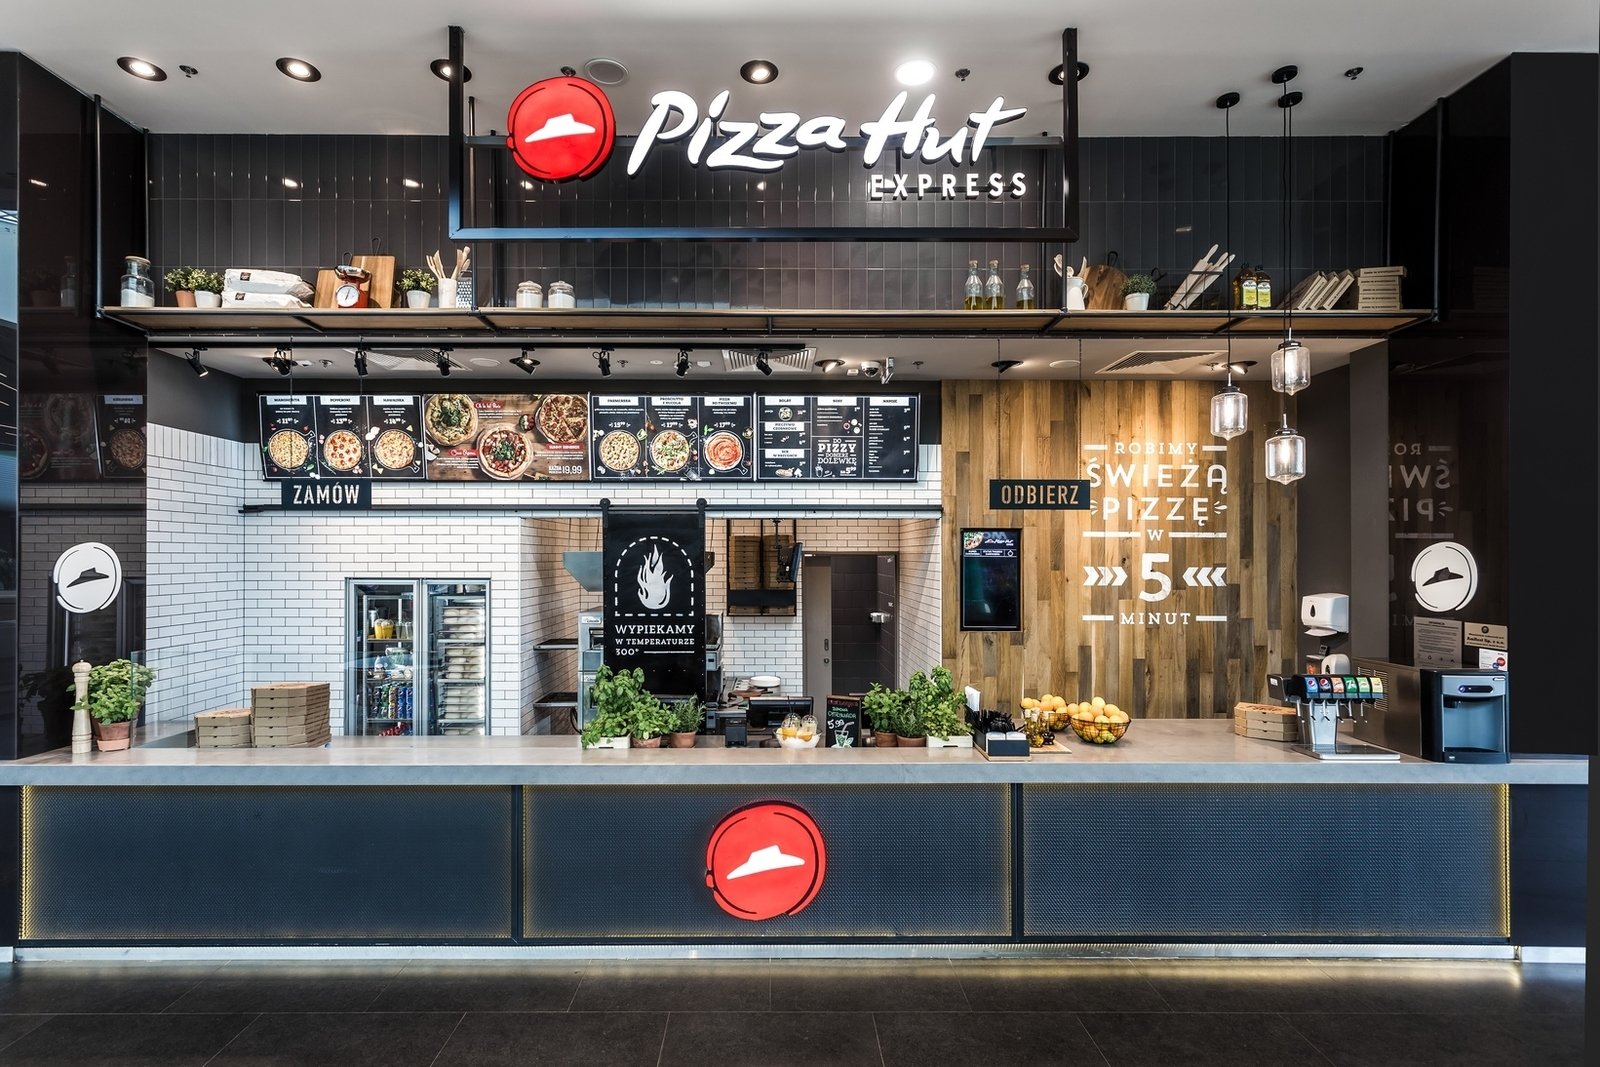 pizza hut franchise model